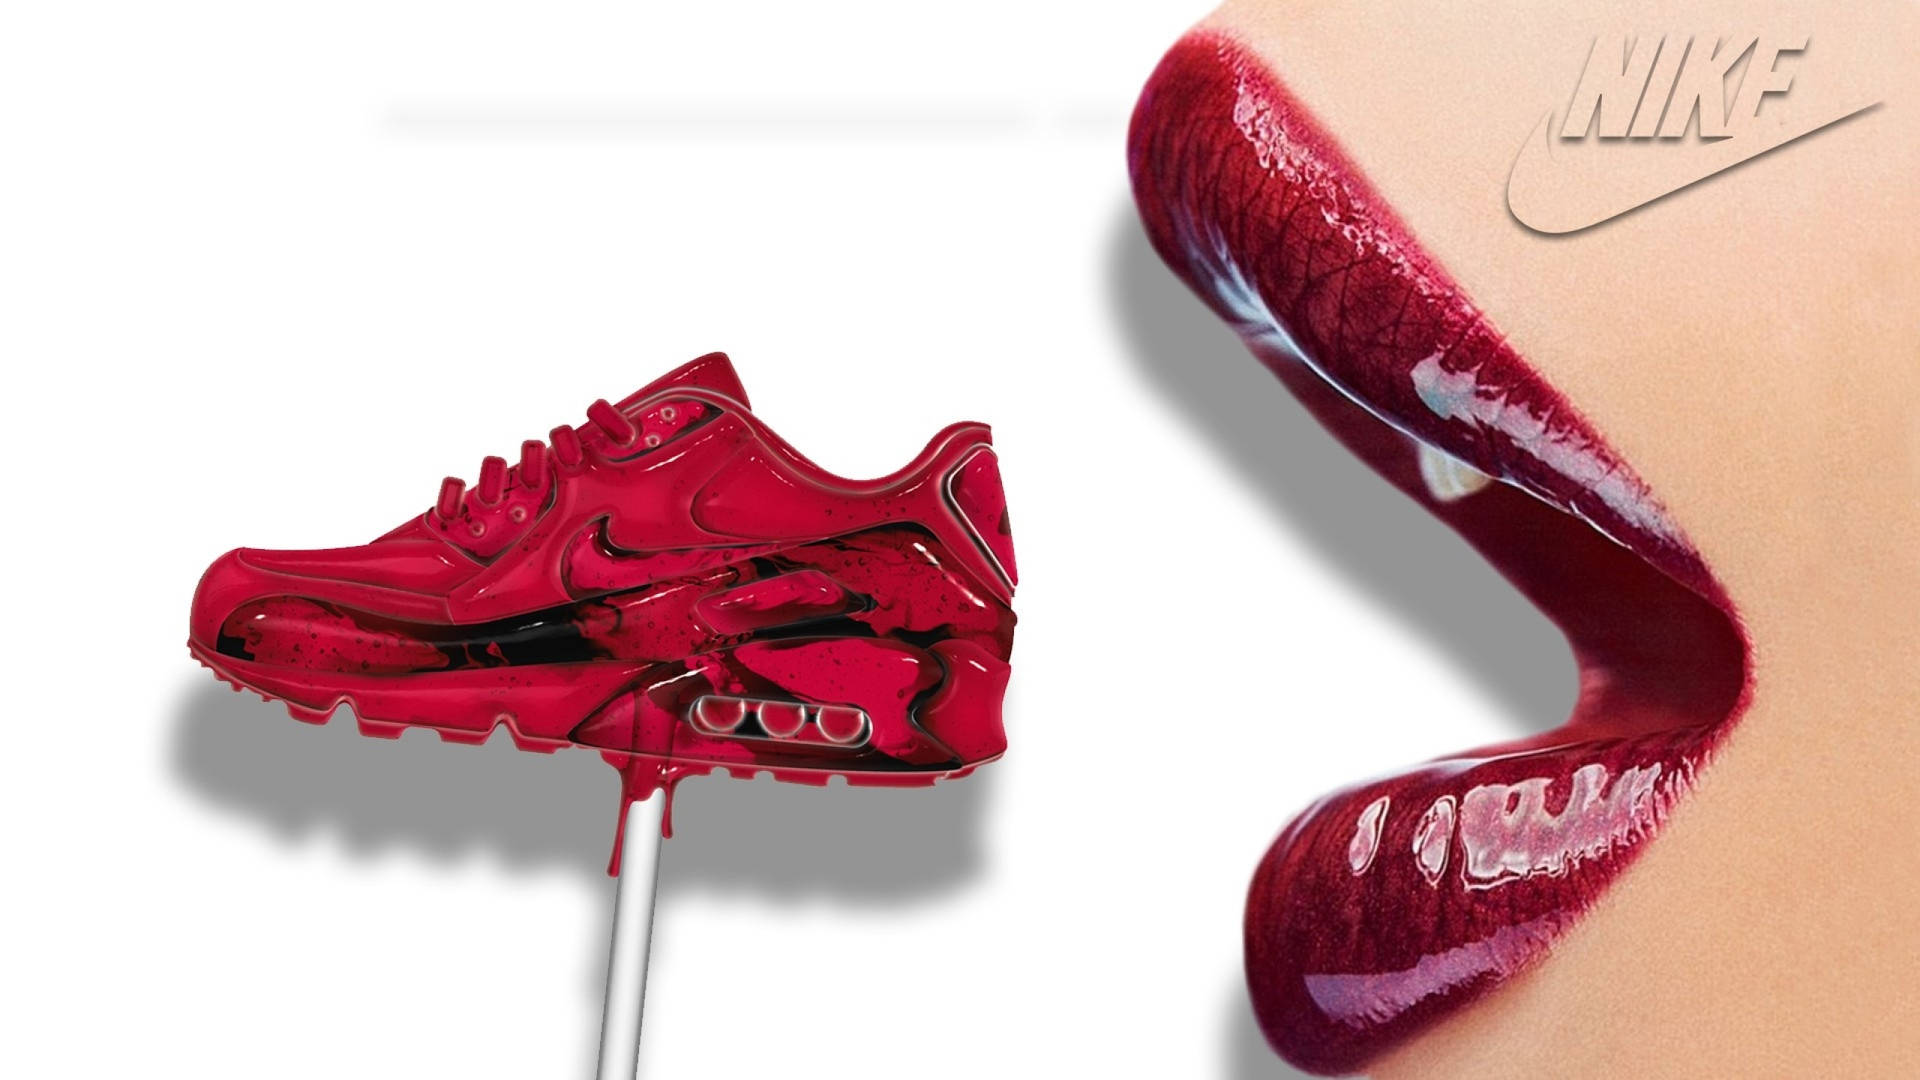 Nike Girl Lips With Lollipop Shoe Background